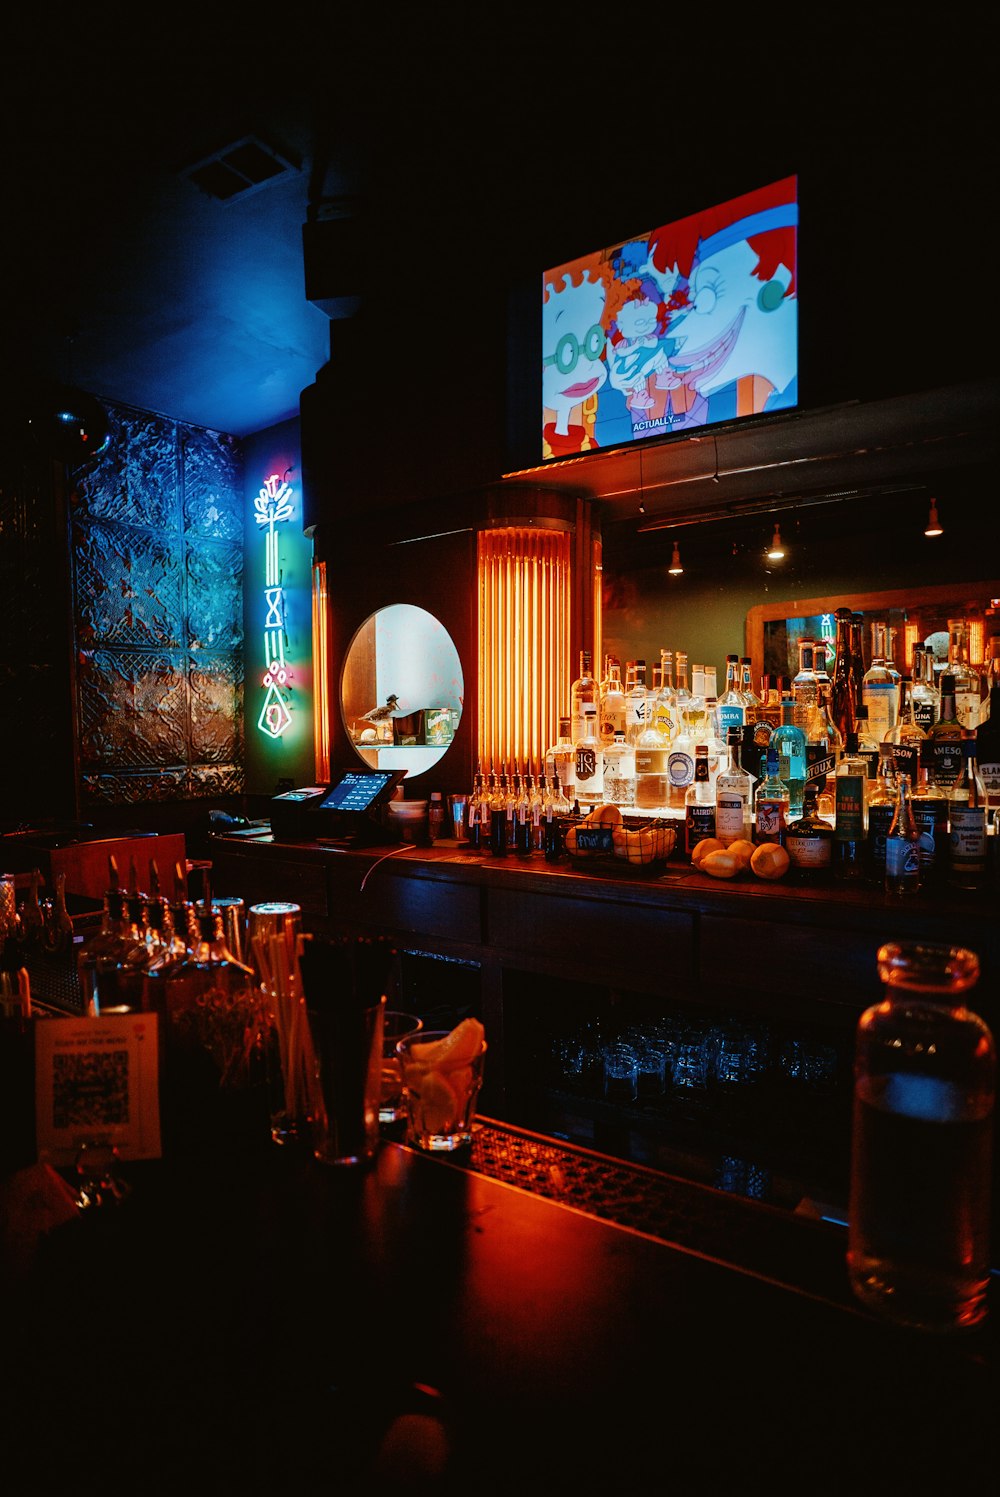 a dimly lit bar with liquor bottles and liquor glasses